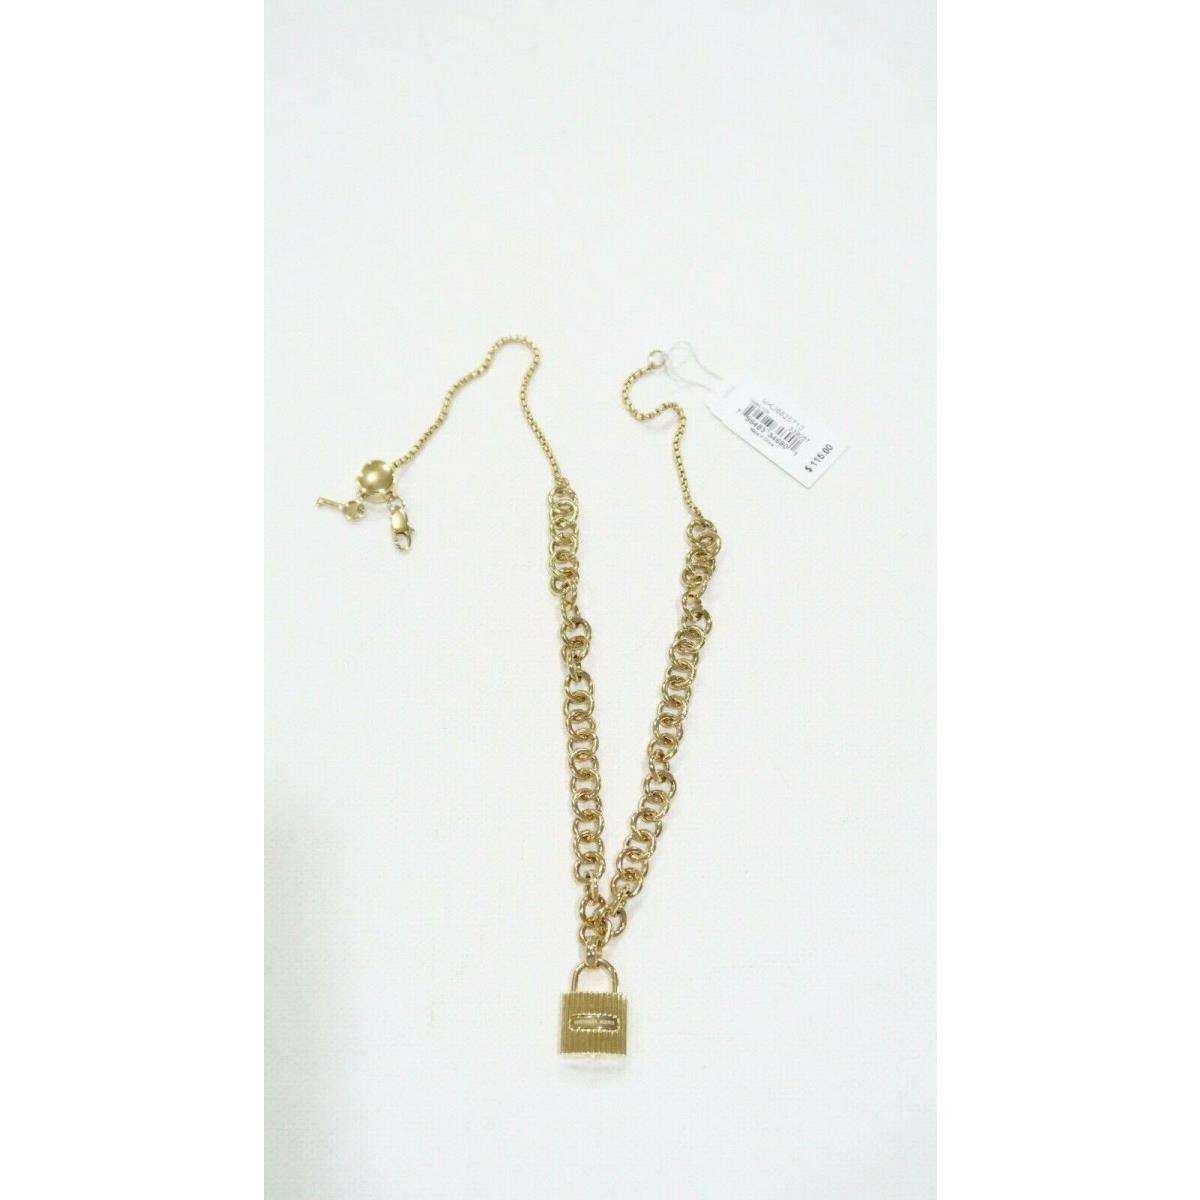 Buy Michael Kors Premium Silver Necklace - MKC1554AN040 | Silver Color  Women | AJIO LUXE